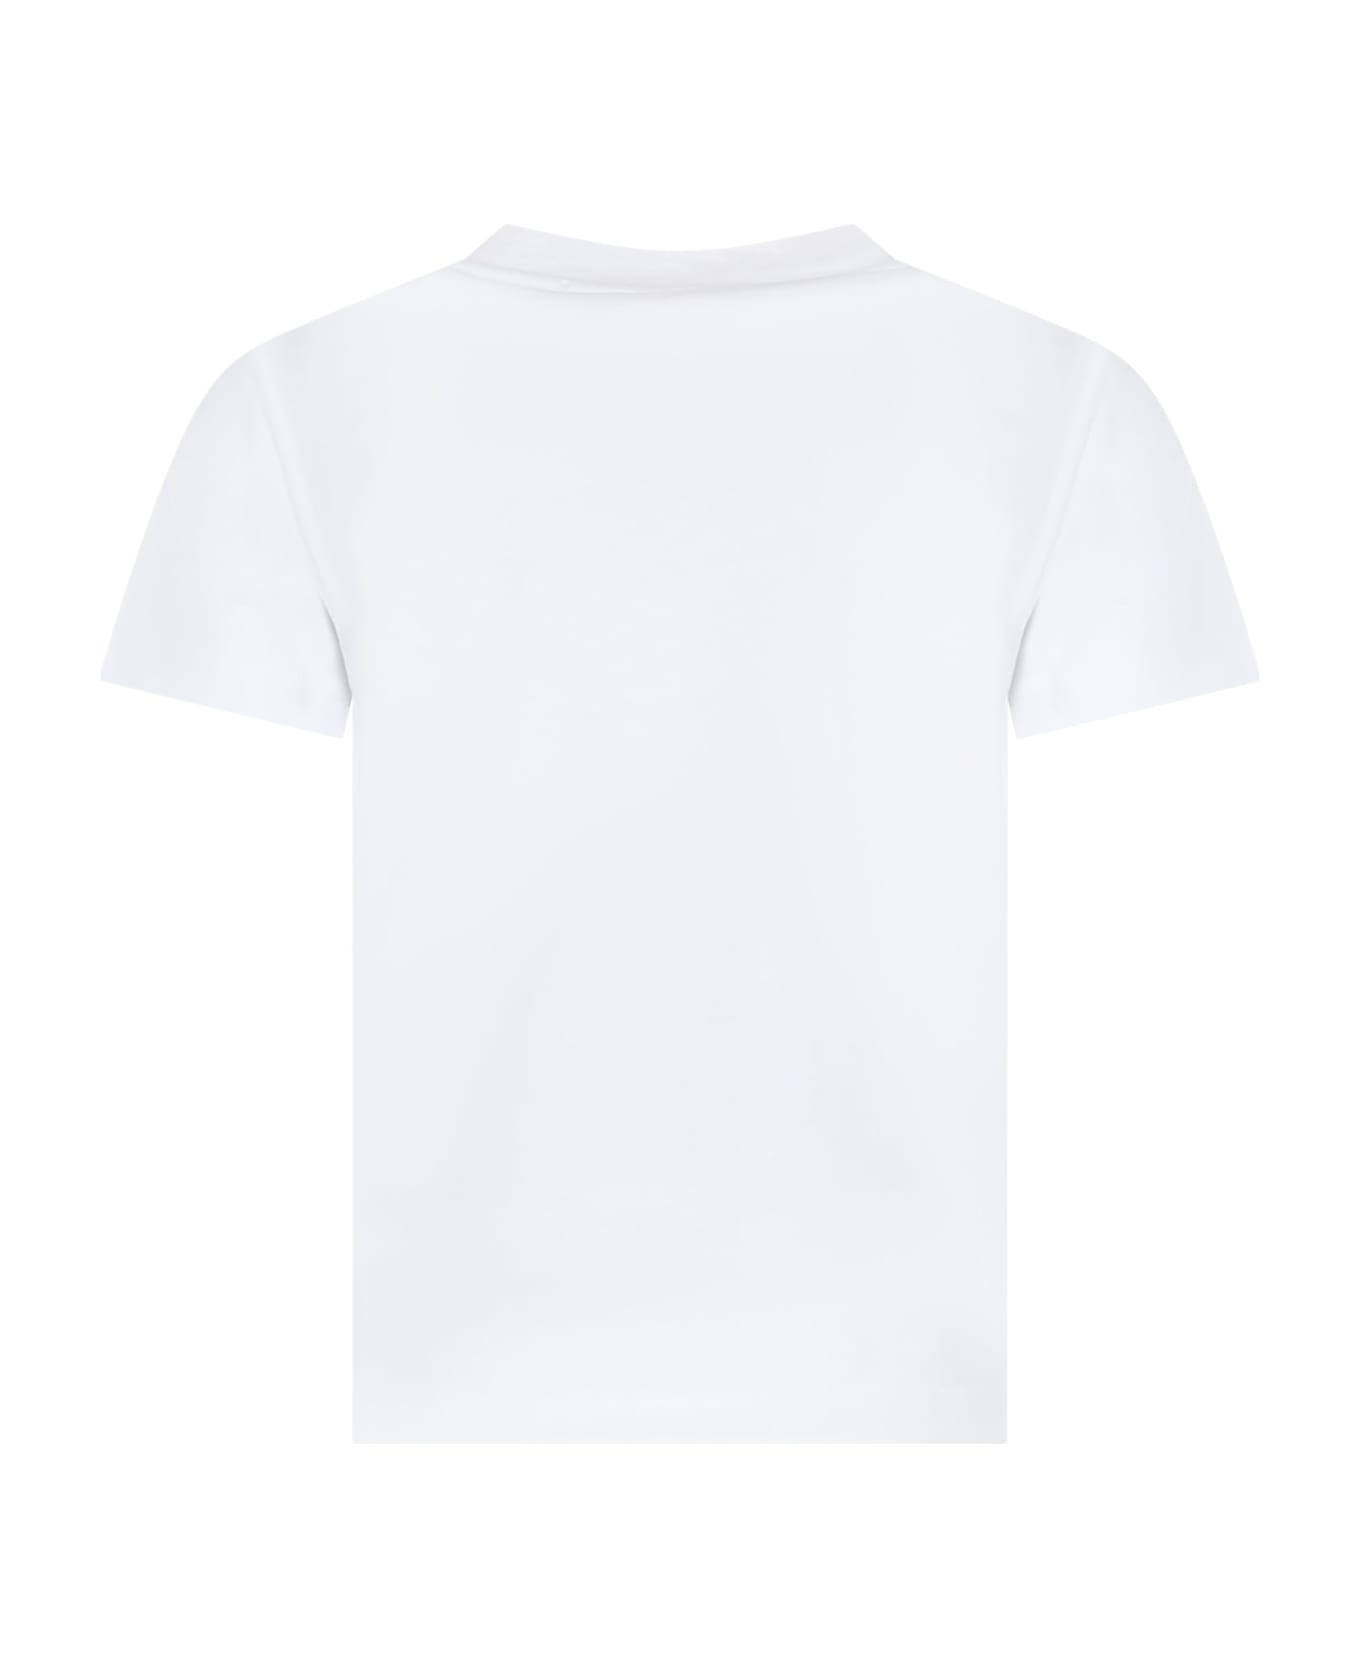 Alessandro Enriquez White T-shirt For Girl With Print Starfish - White